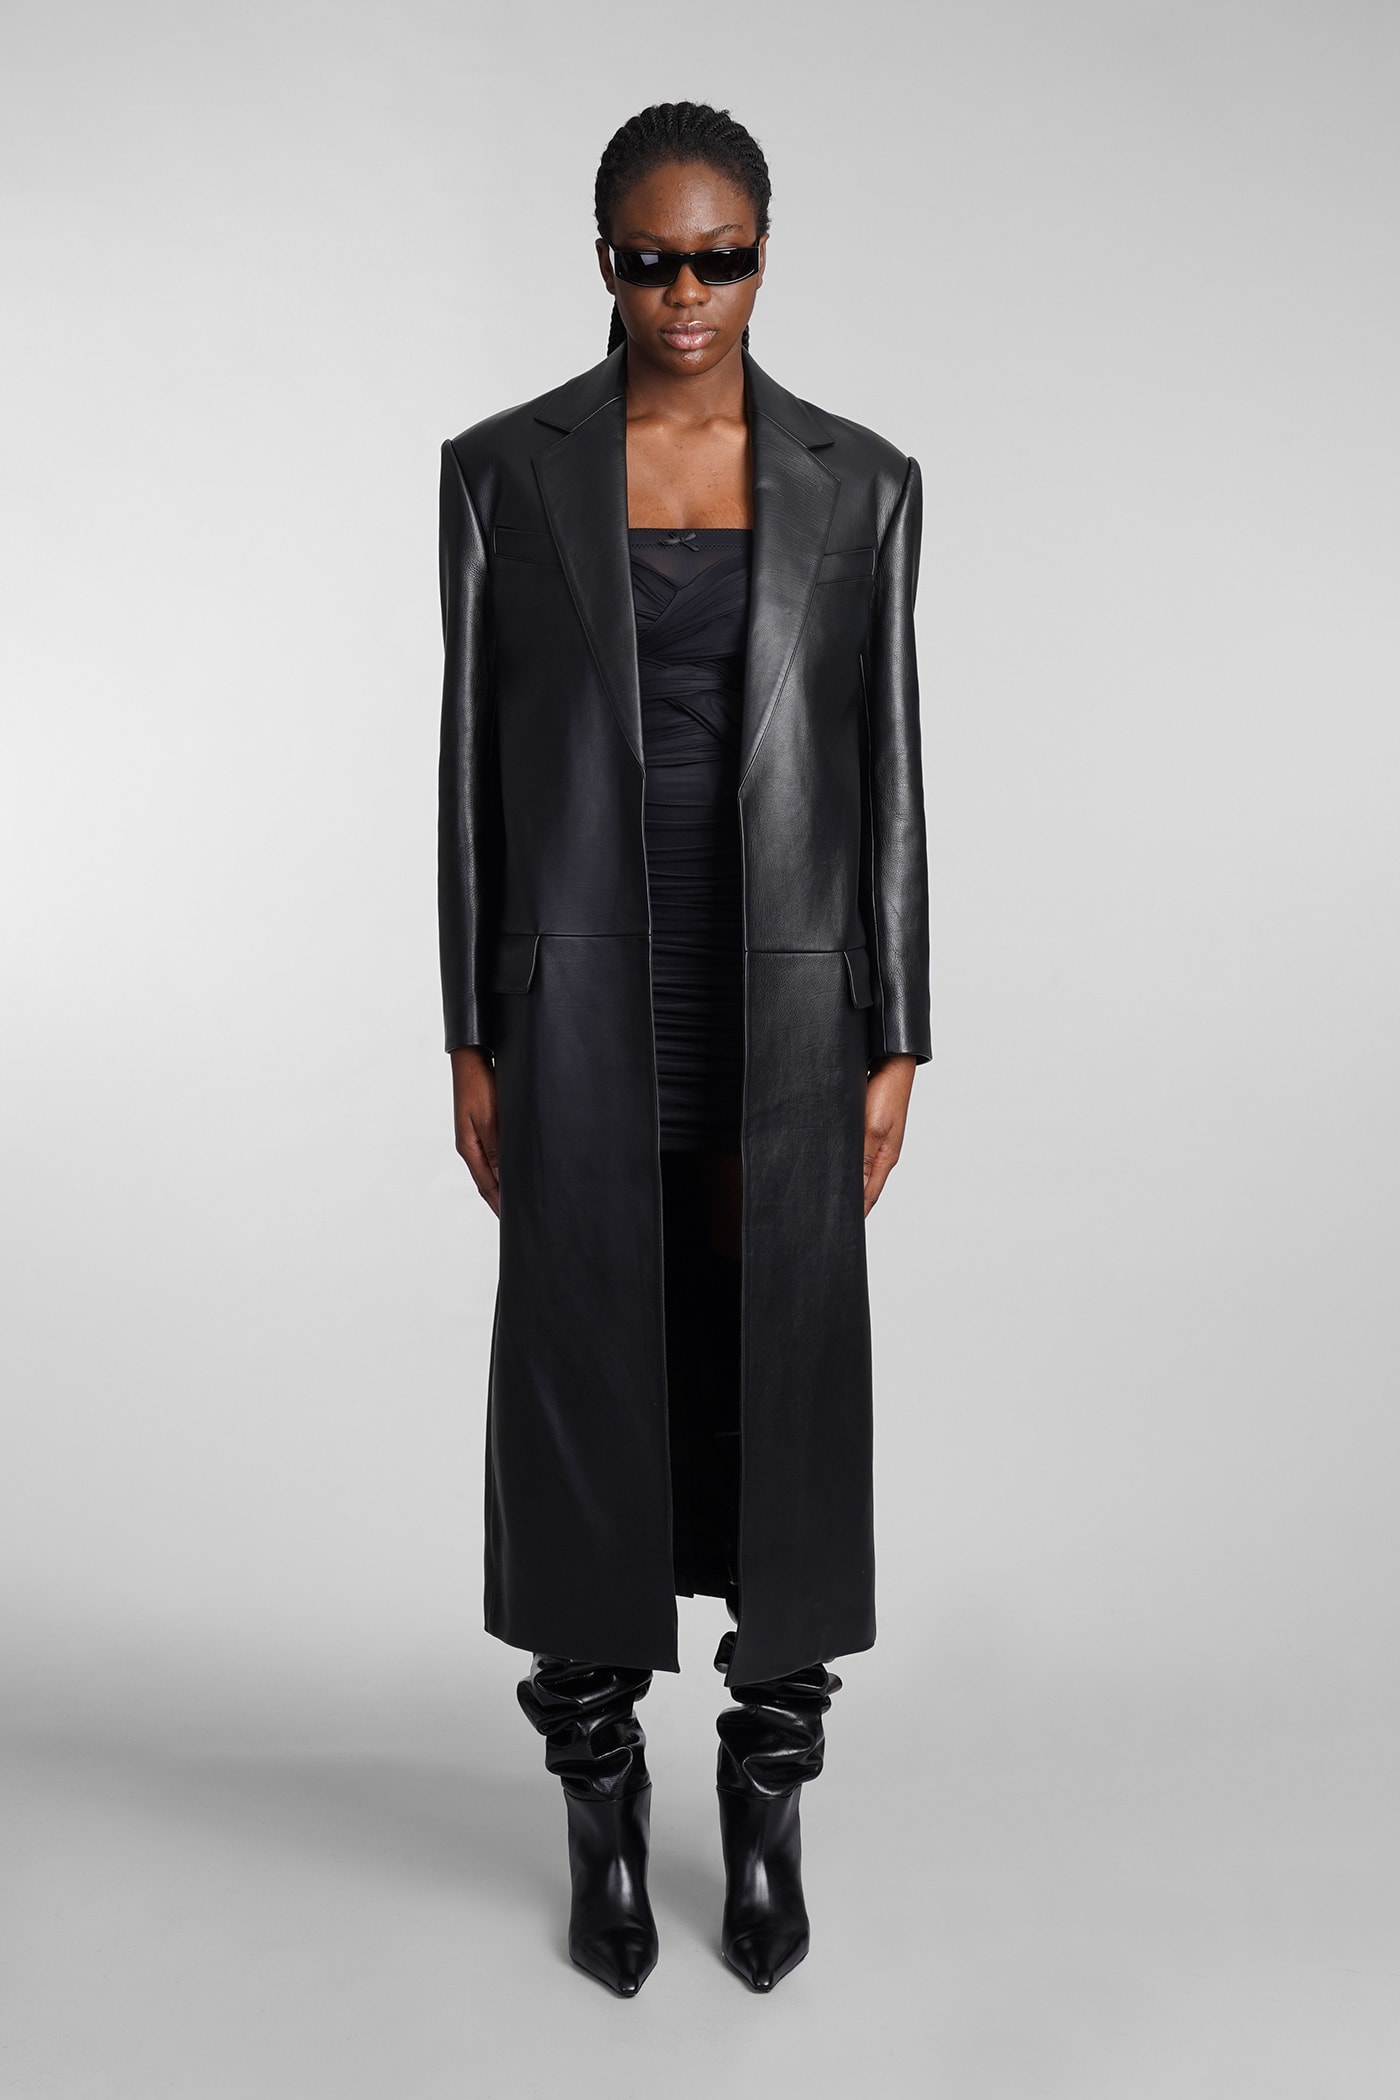 Alexander Wang Coat In Black Leather